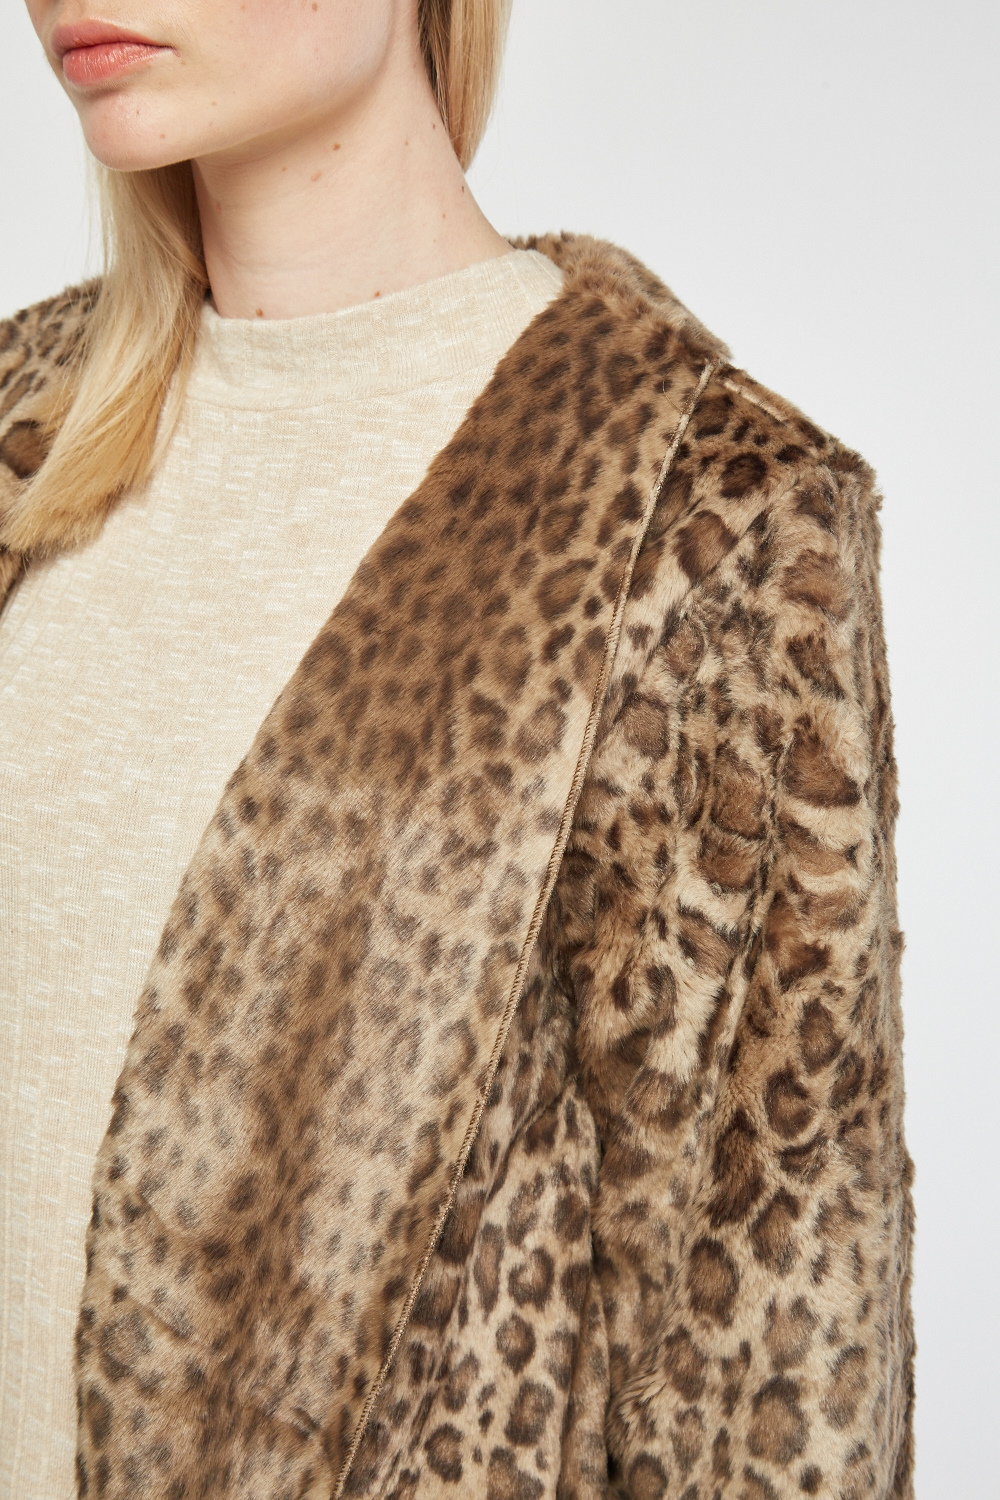 Animal Print Faux Fur Jacket - Just $7